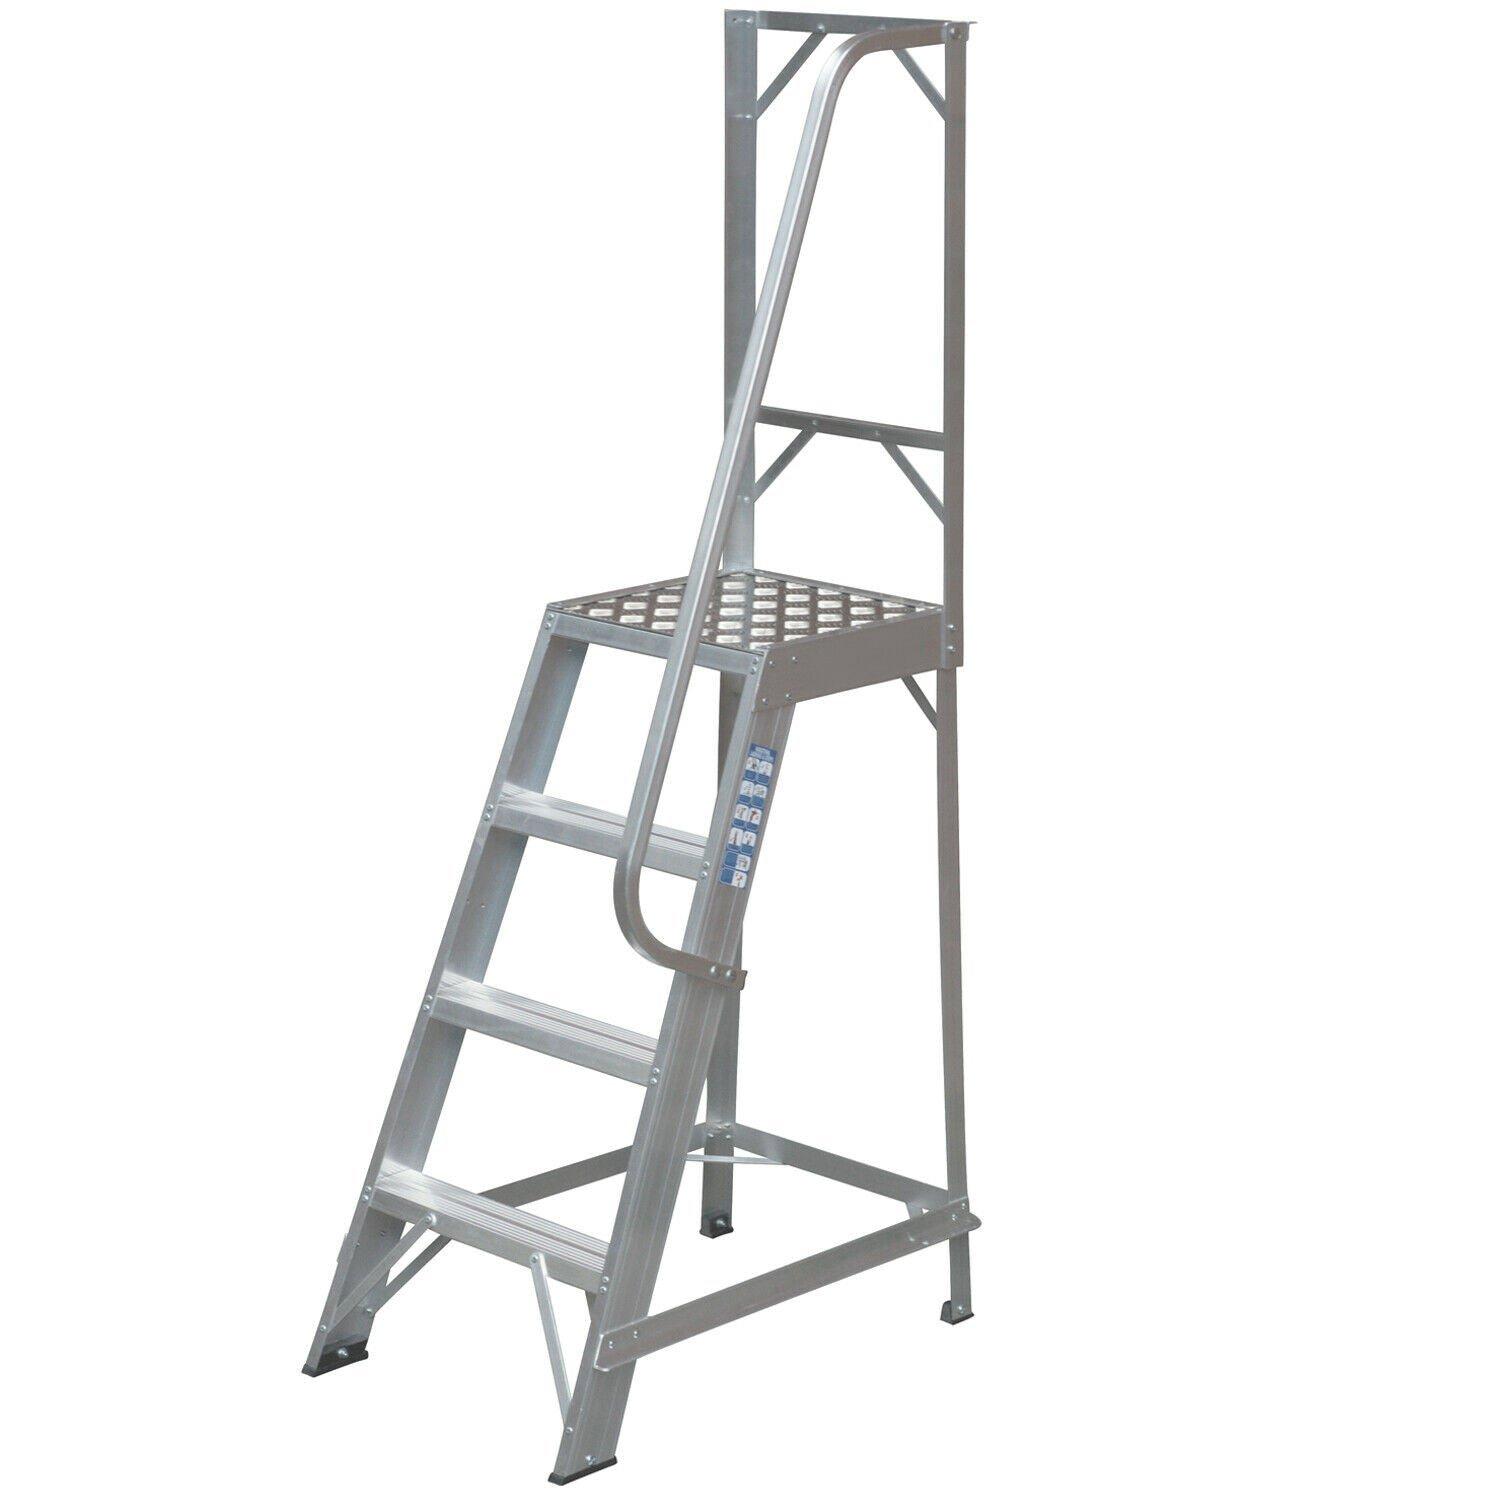 1m Heavy Duty Single Sided Fixed Step Ladders Handrail Platform Safety Barrier